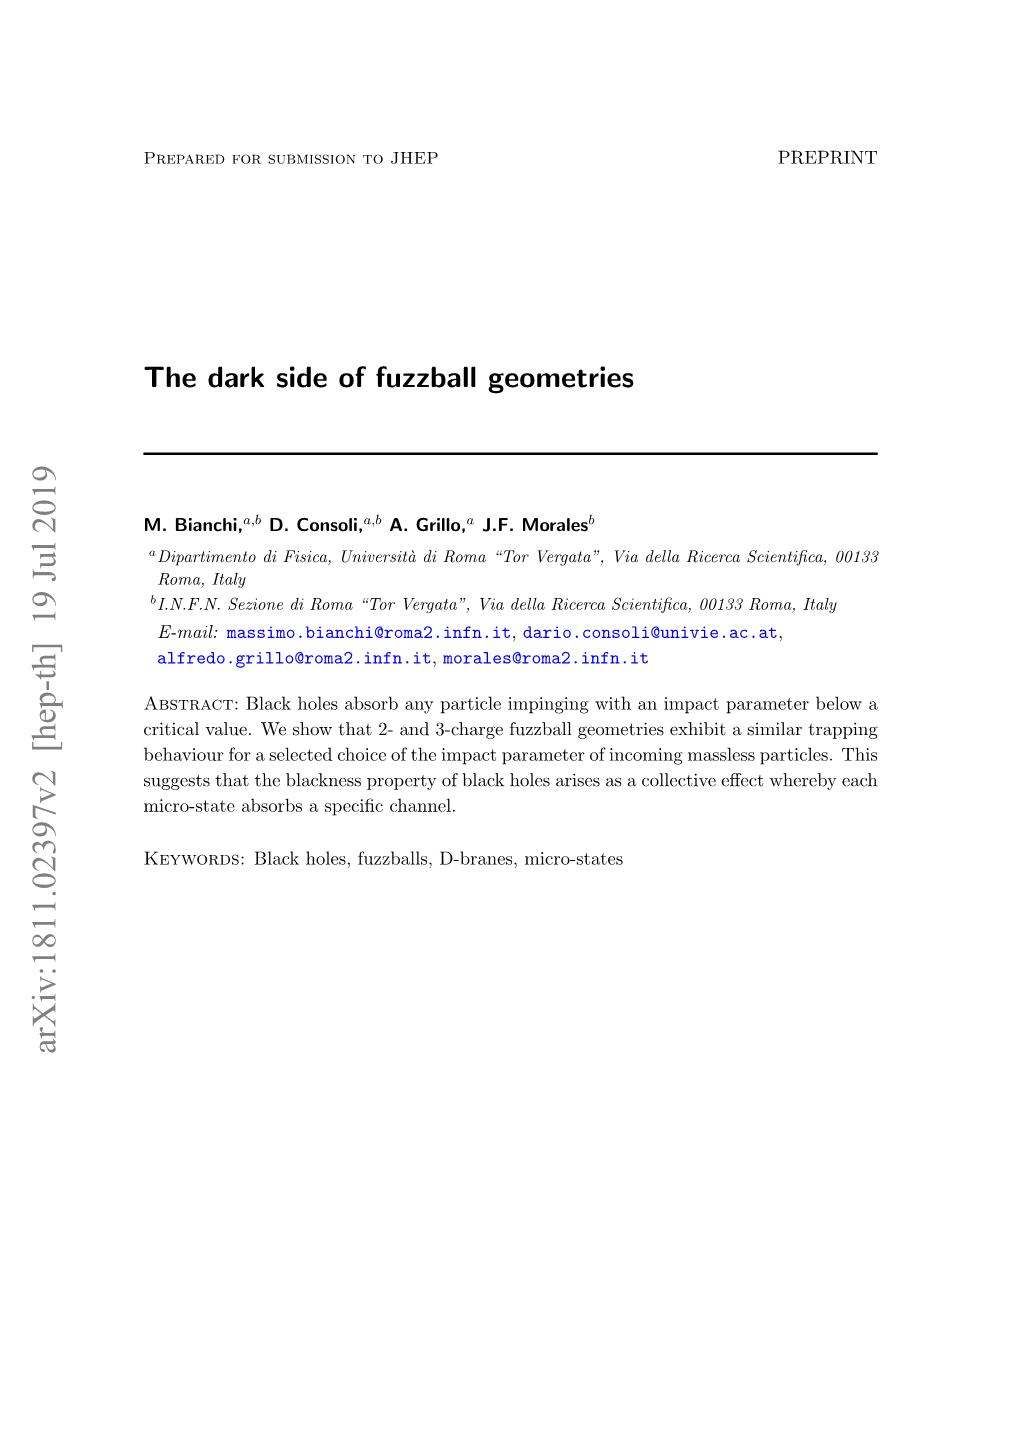 The Dark Side of Fuzzball Geometries